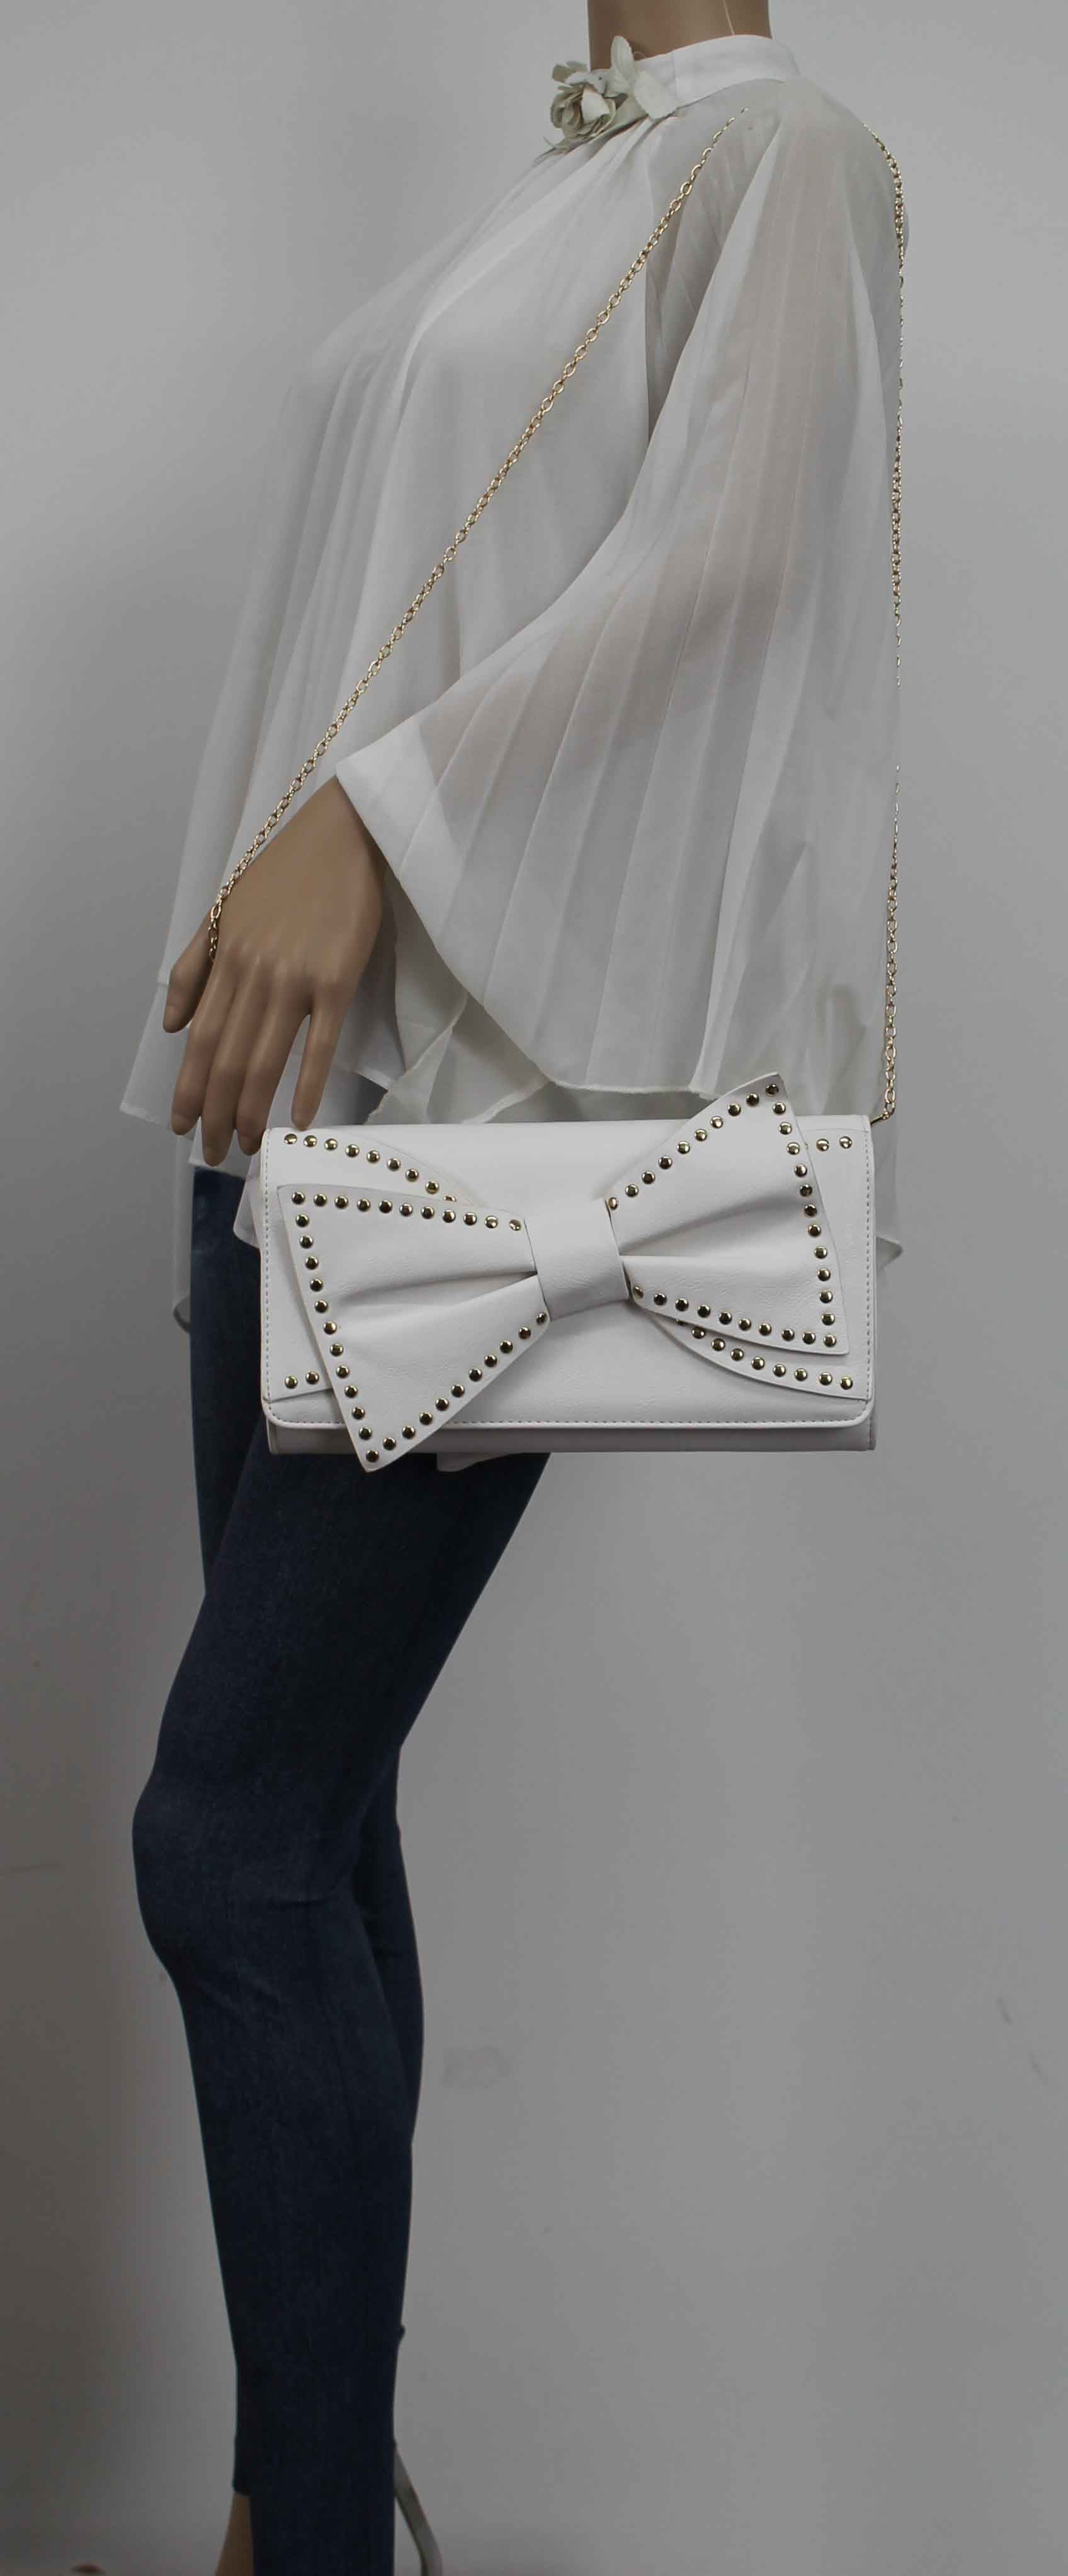 SWANKYSWANS Kelly Bow Clutch Bag White Cute Cheap Clutch Bag For Weddings School and Work